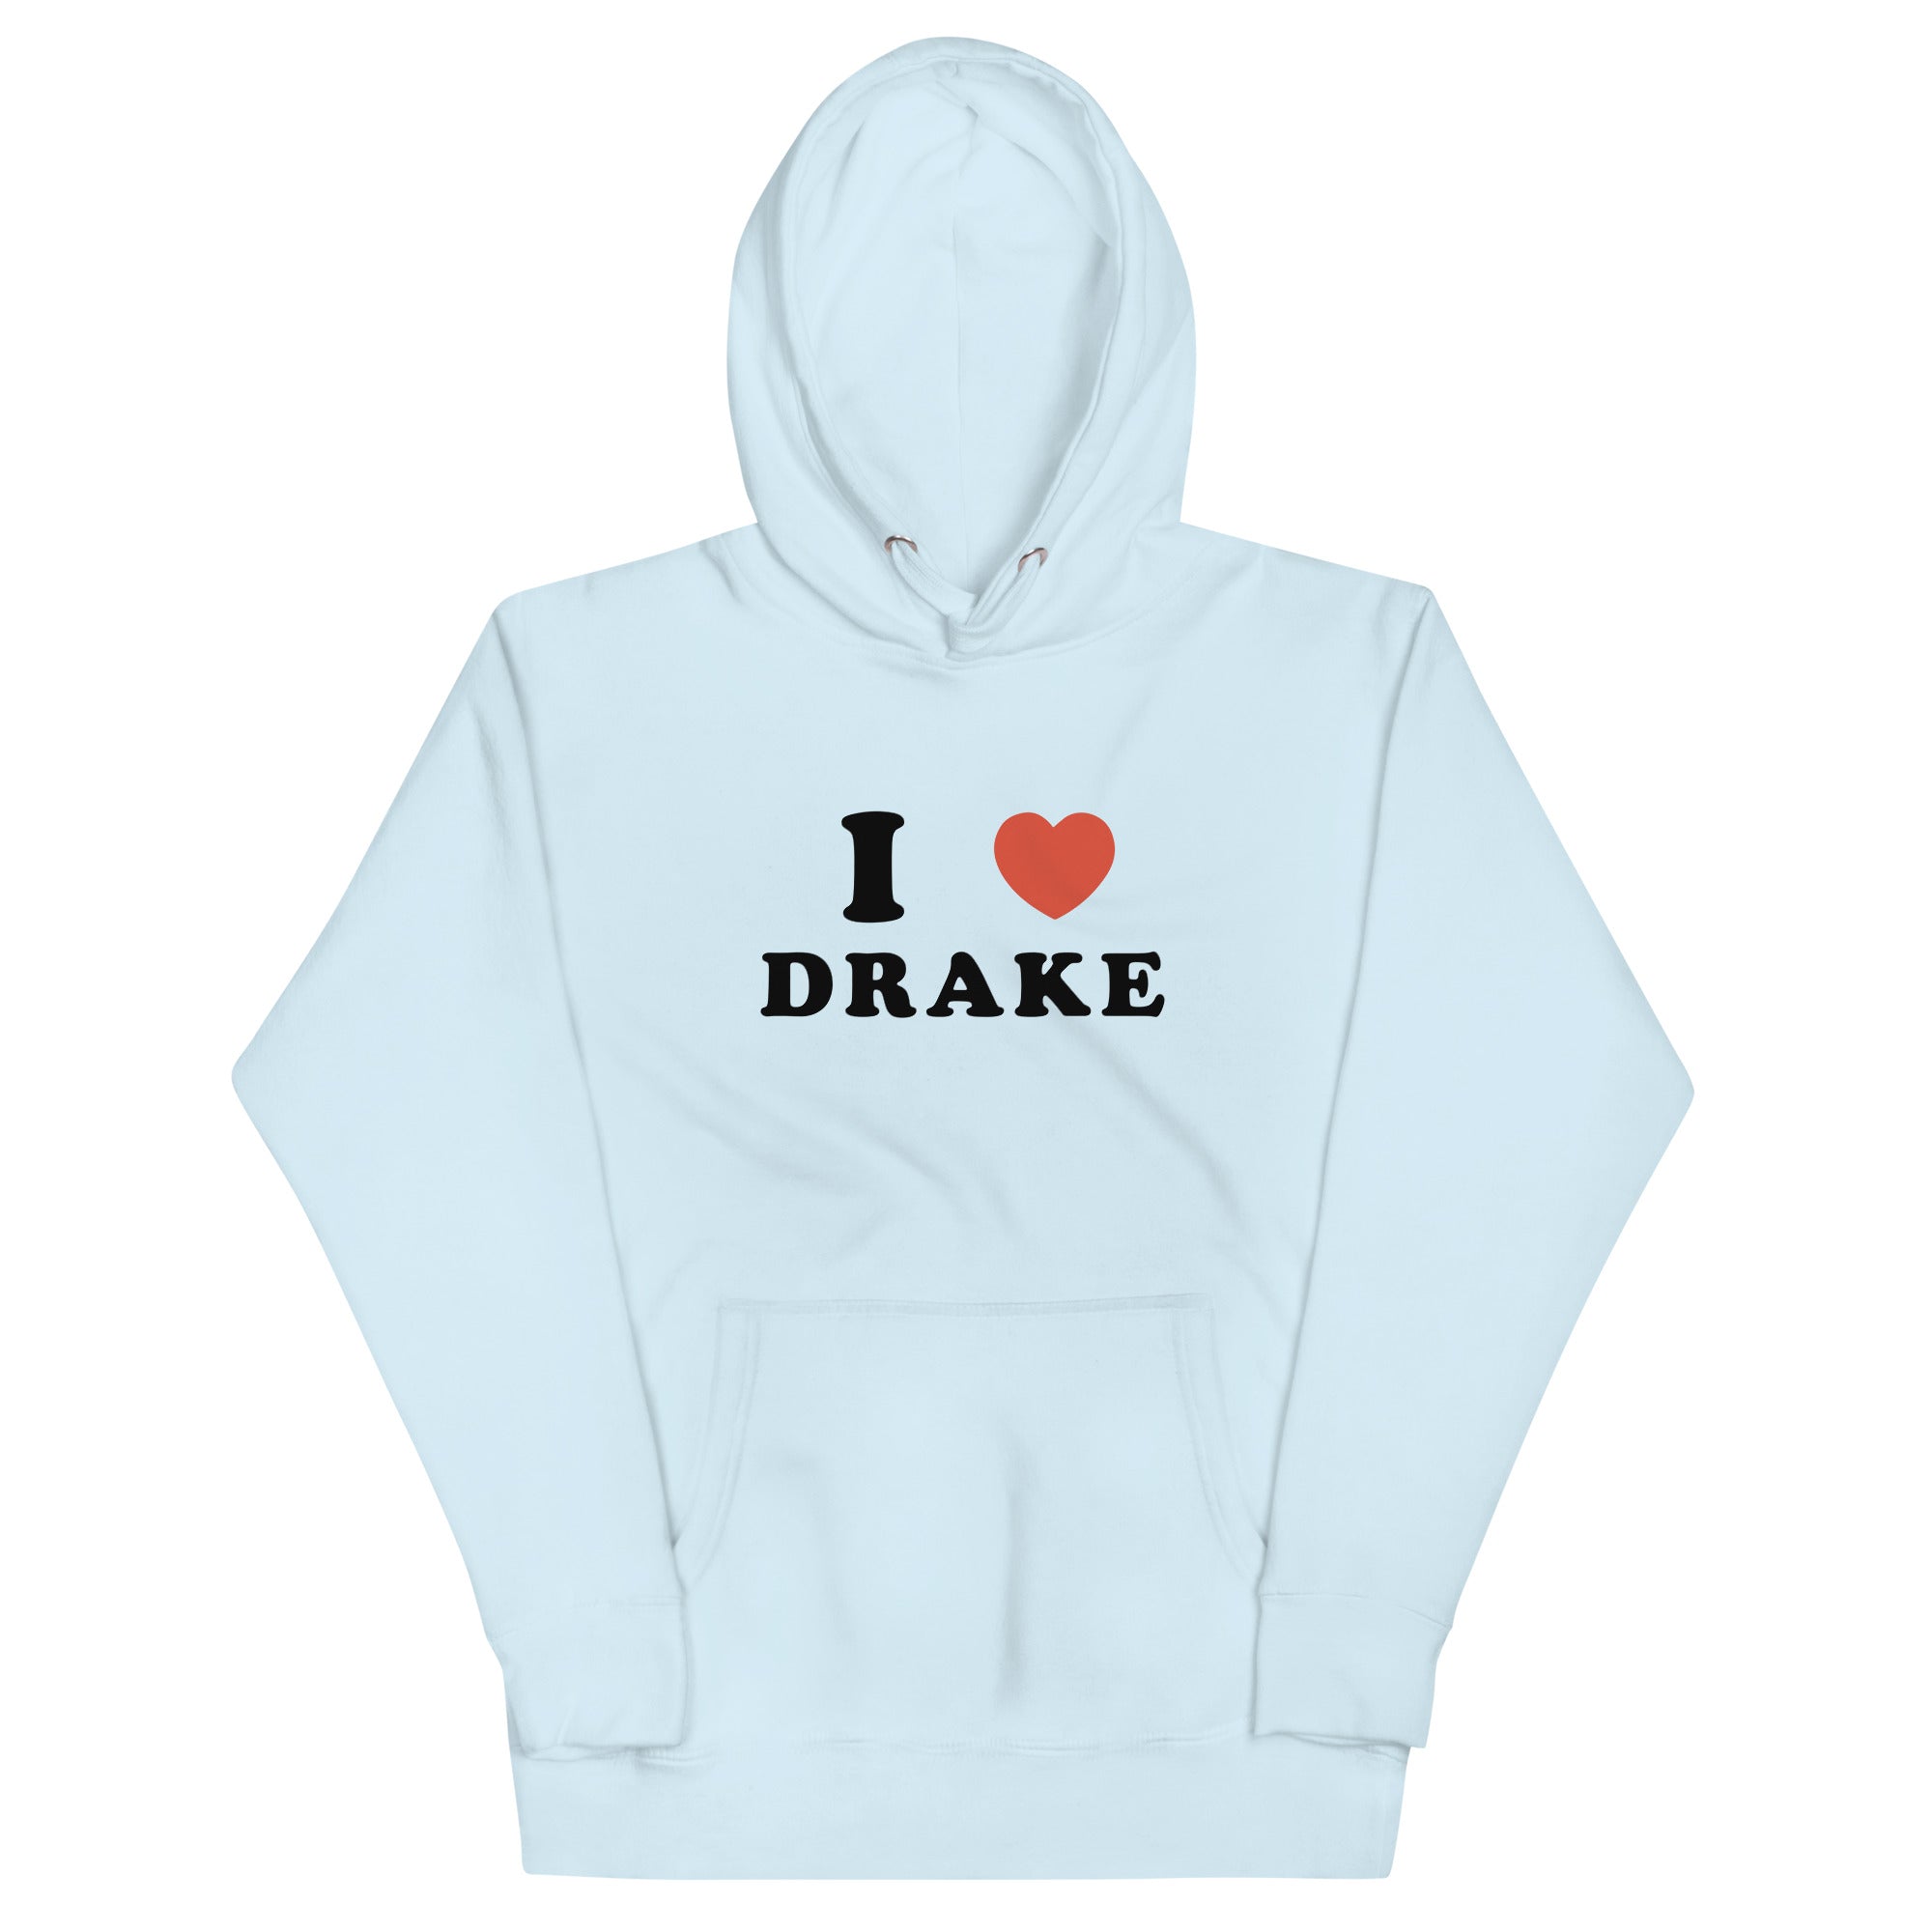 I love drake hoodie